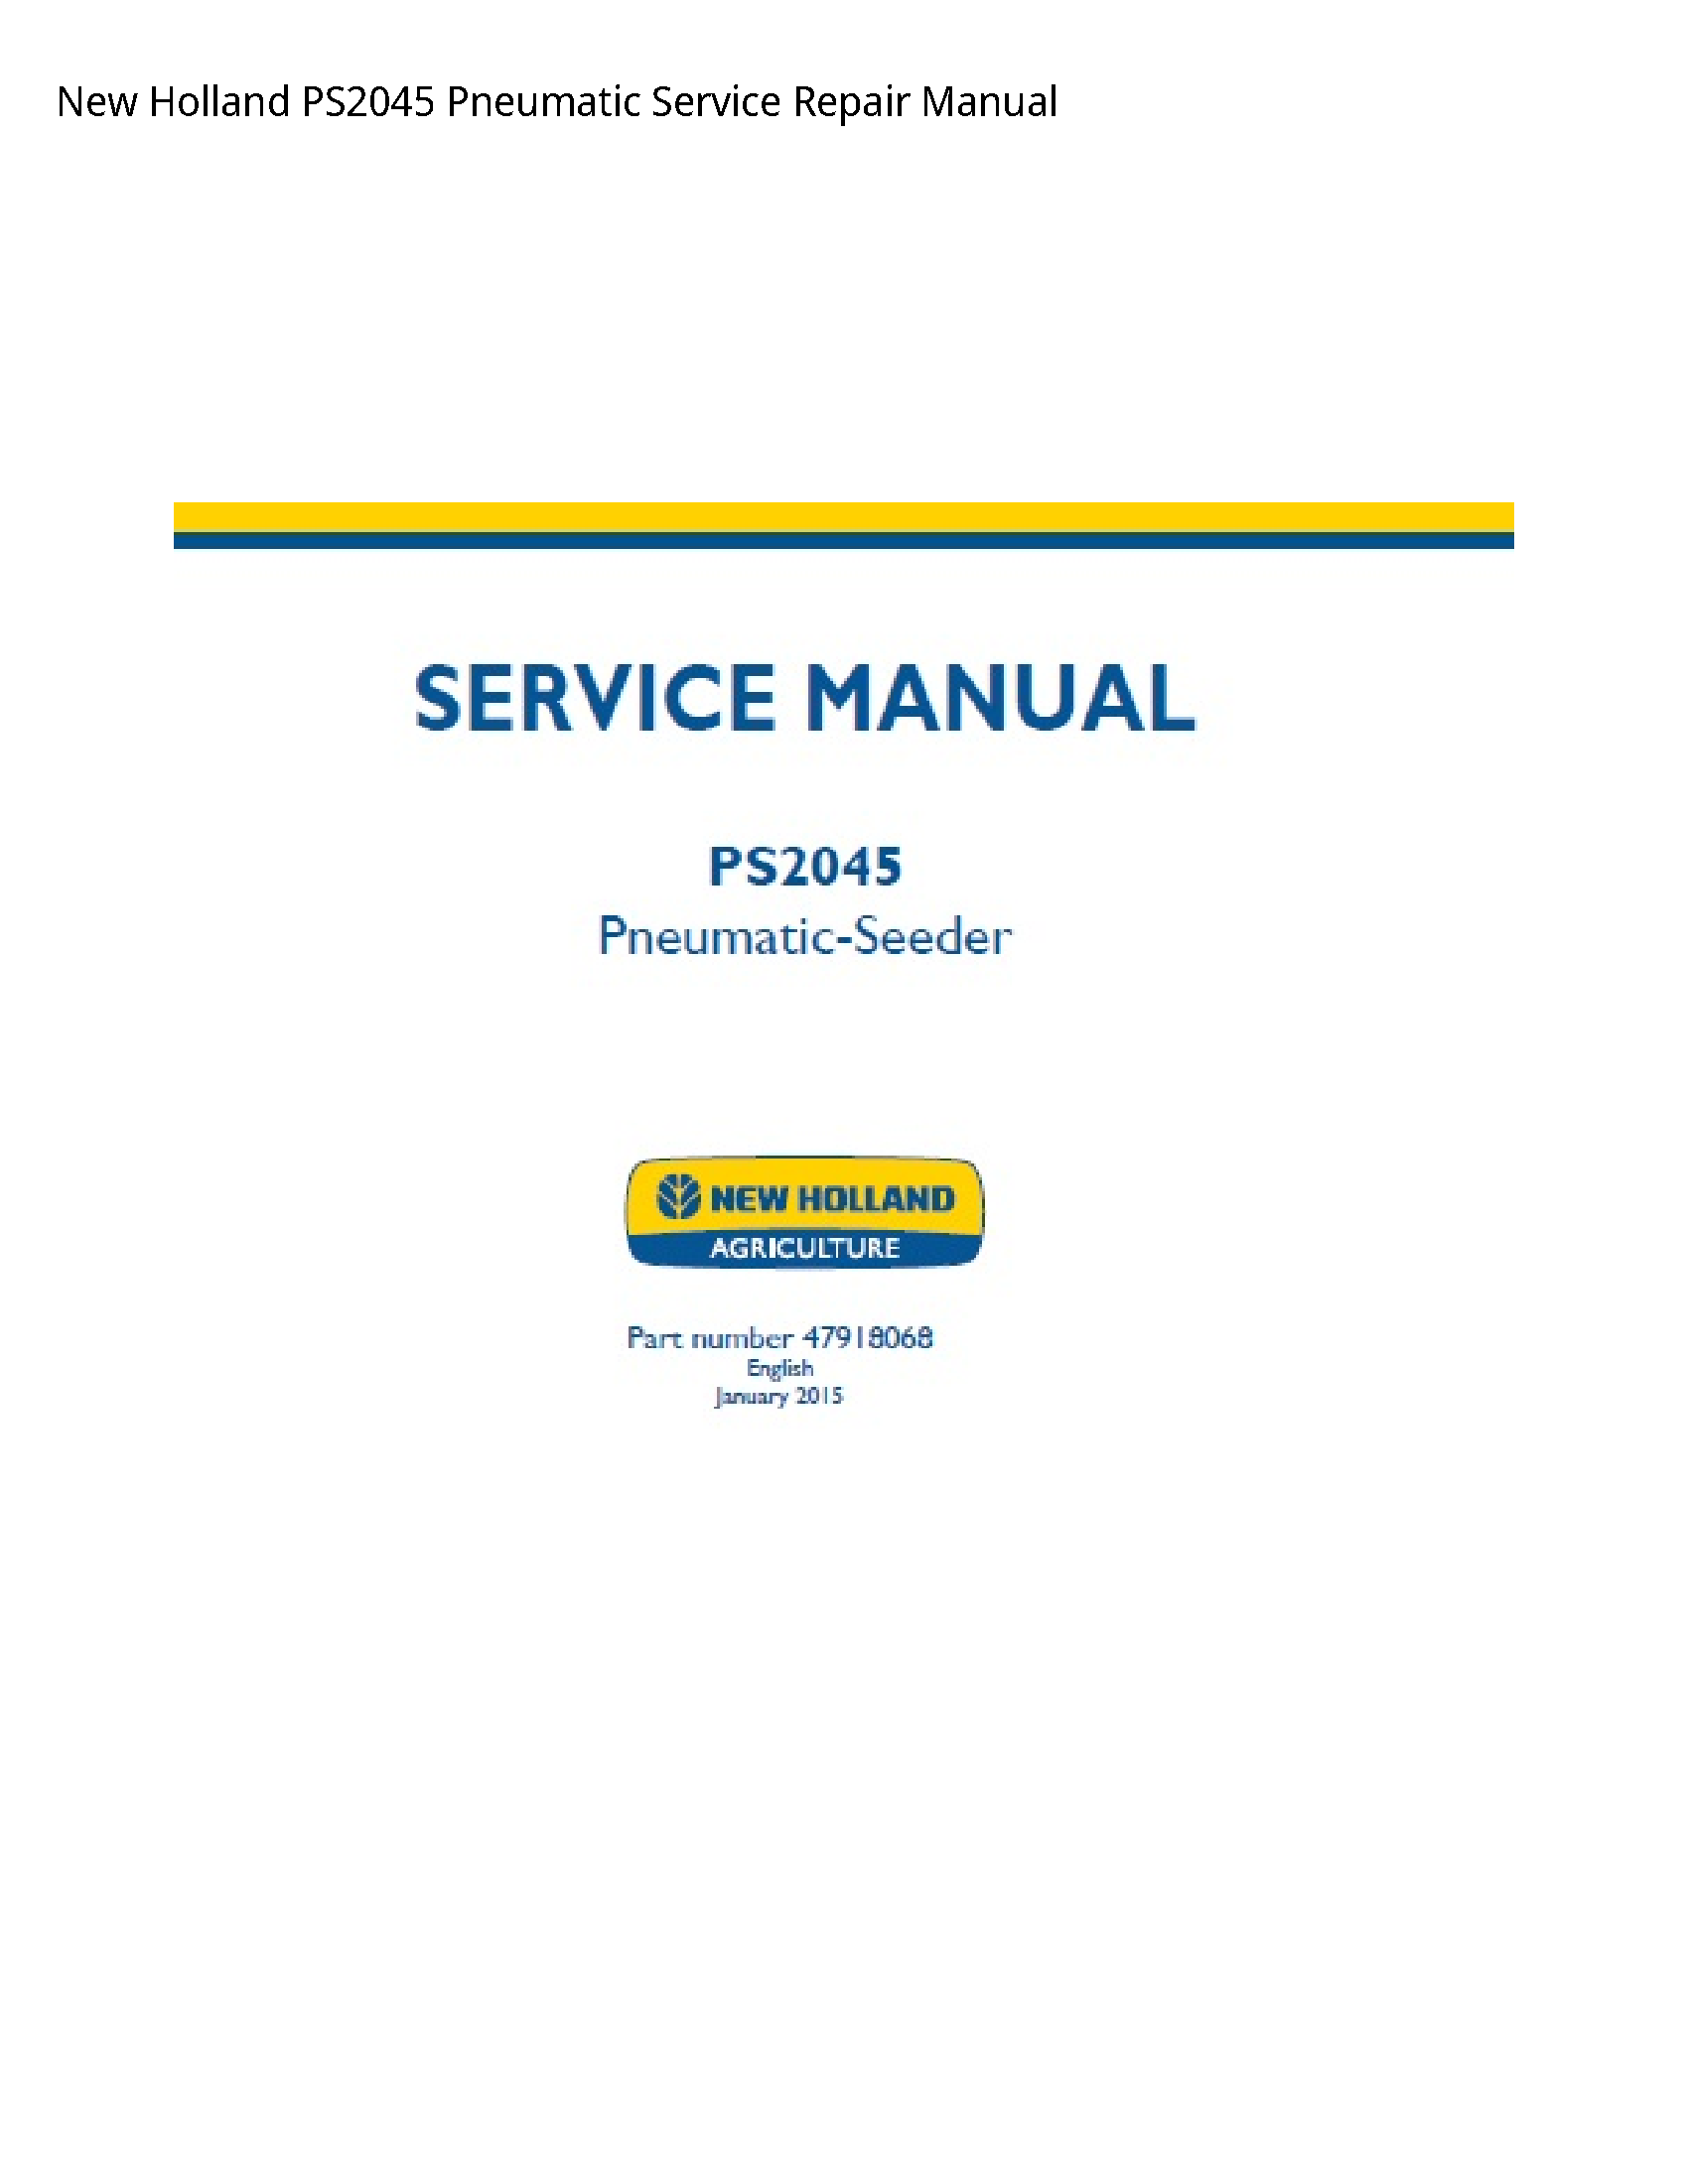 New Holland PS2045 Pneumatic manual